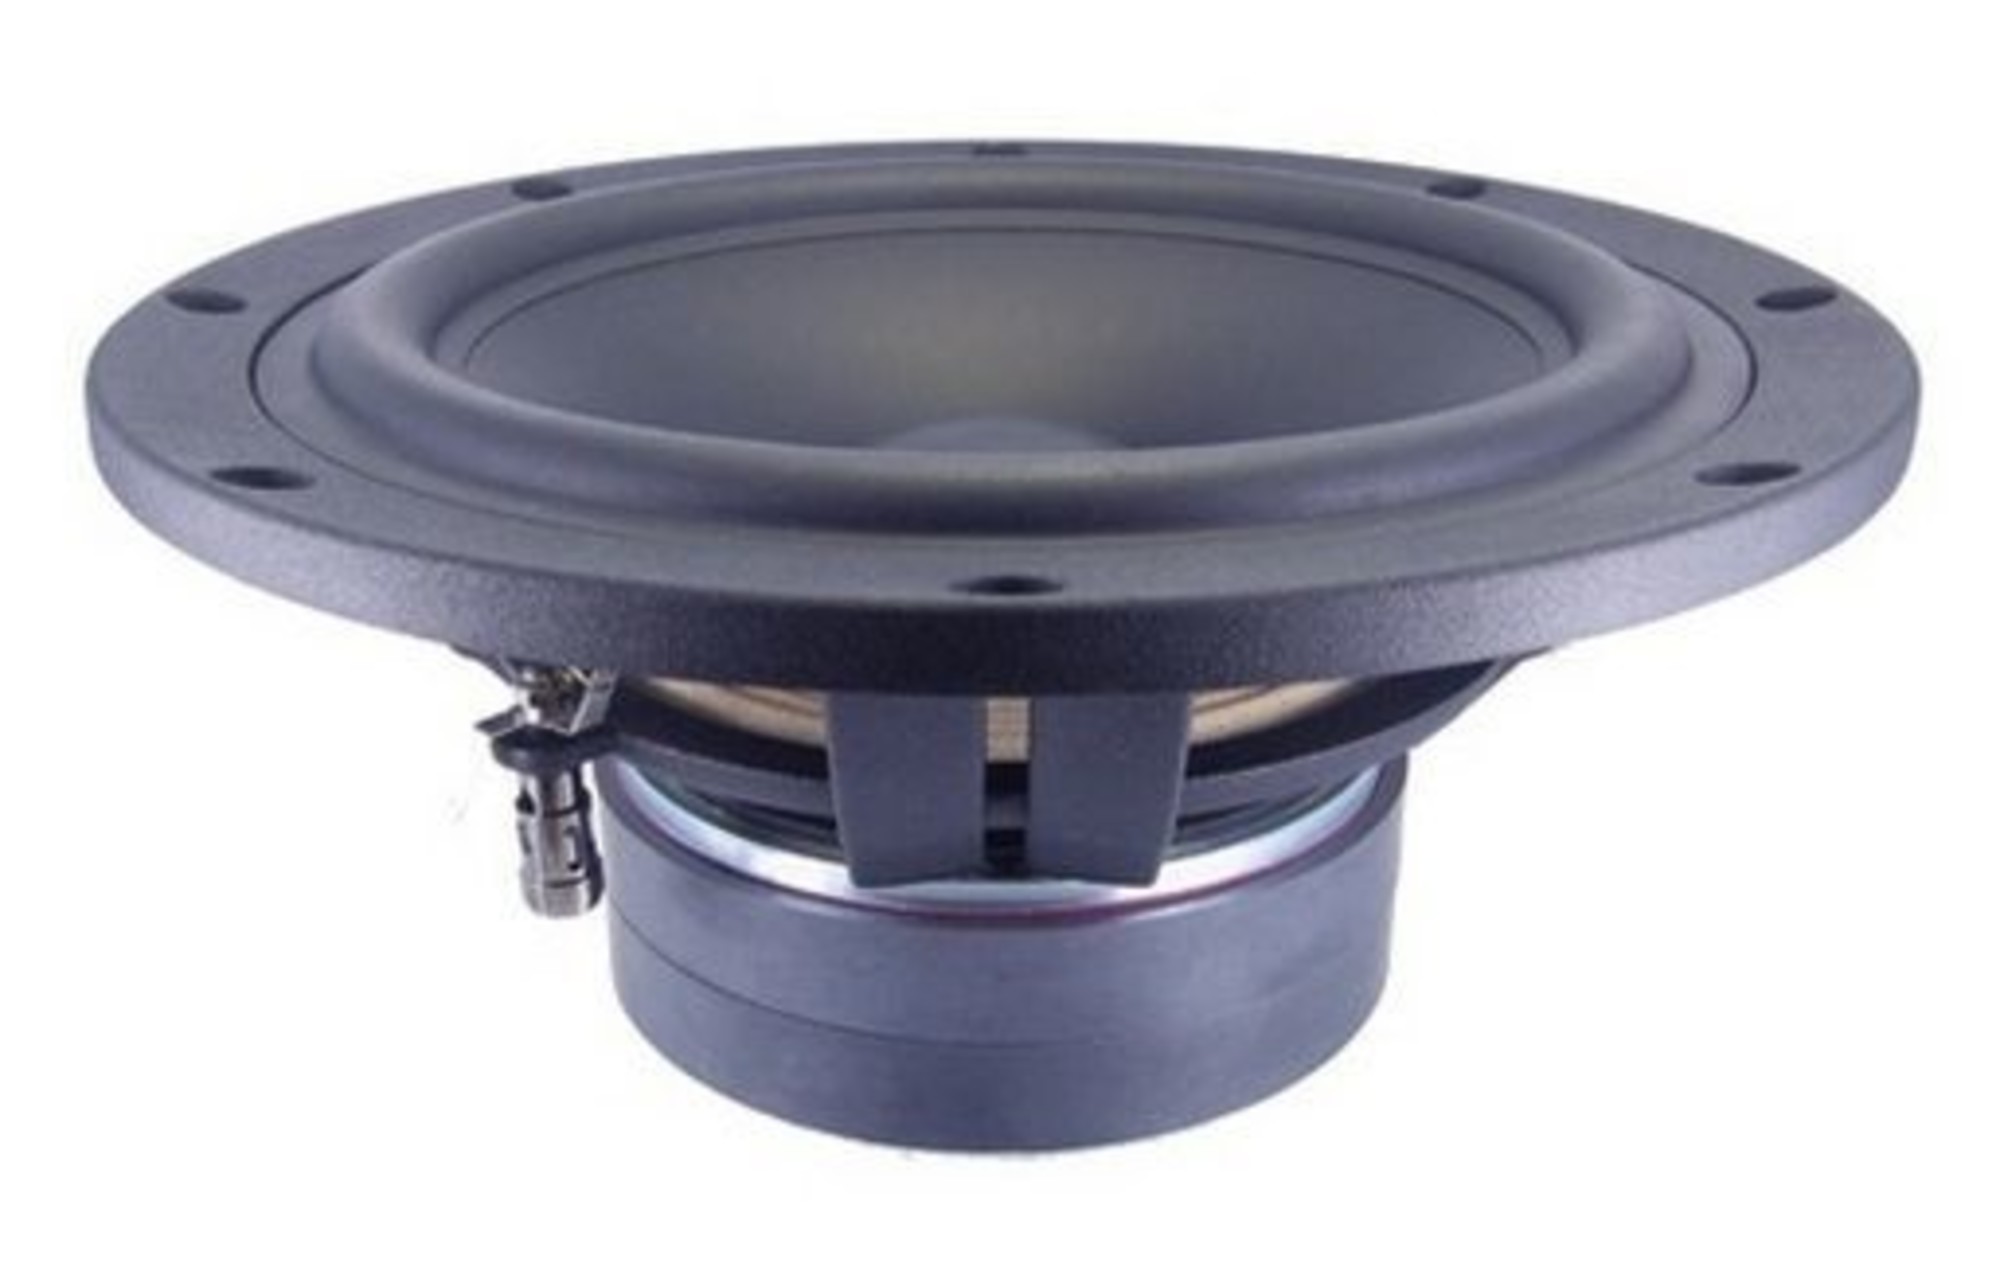 Woofere & midbas - SB Acoustics SB29SWNRX-S75-6 , audioclub.ro